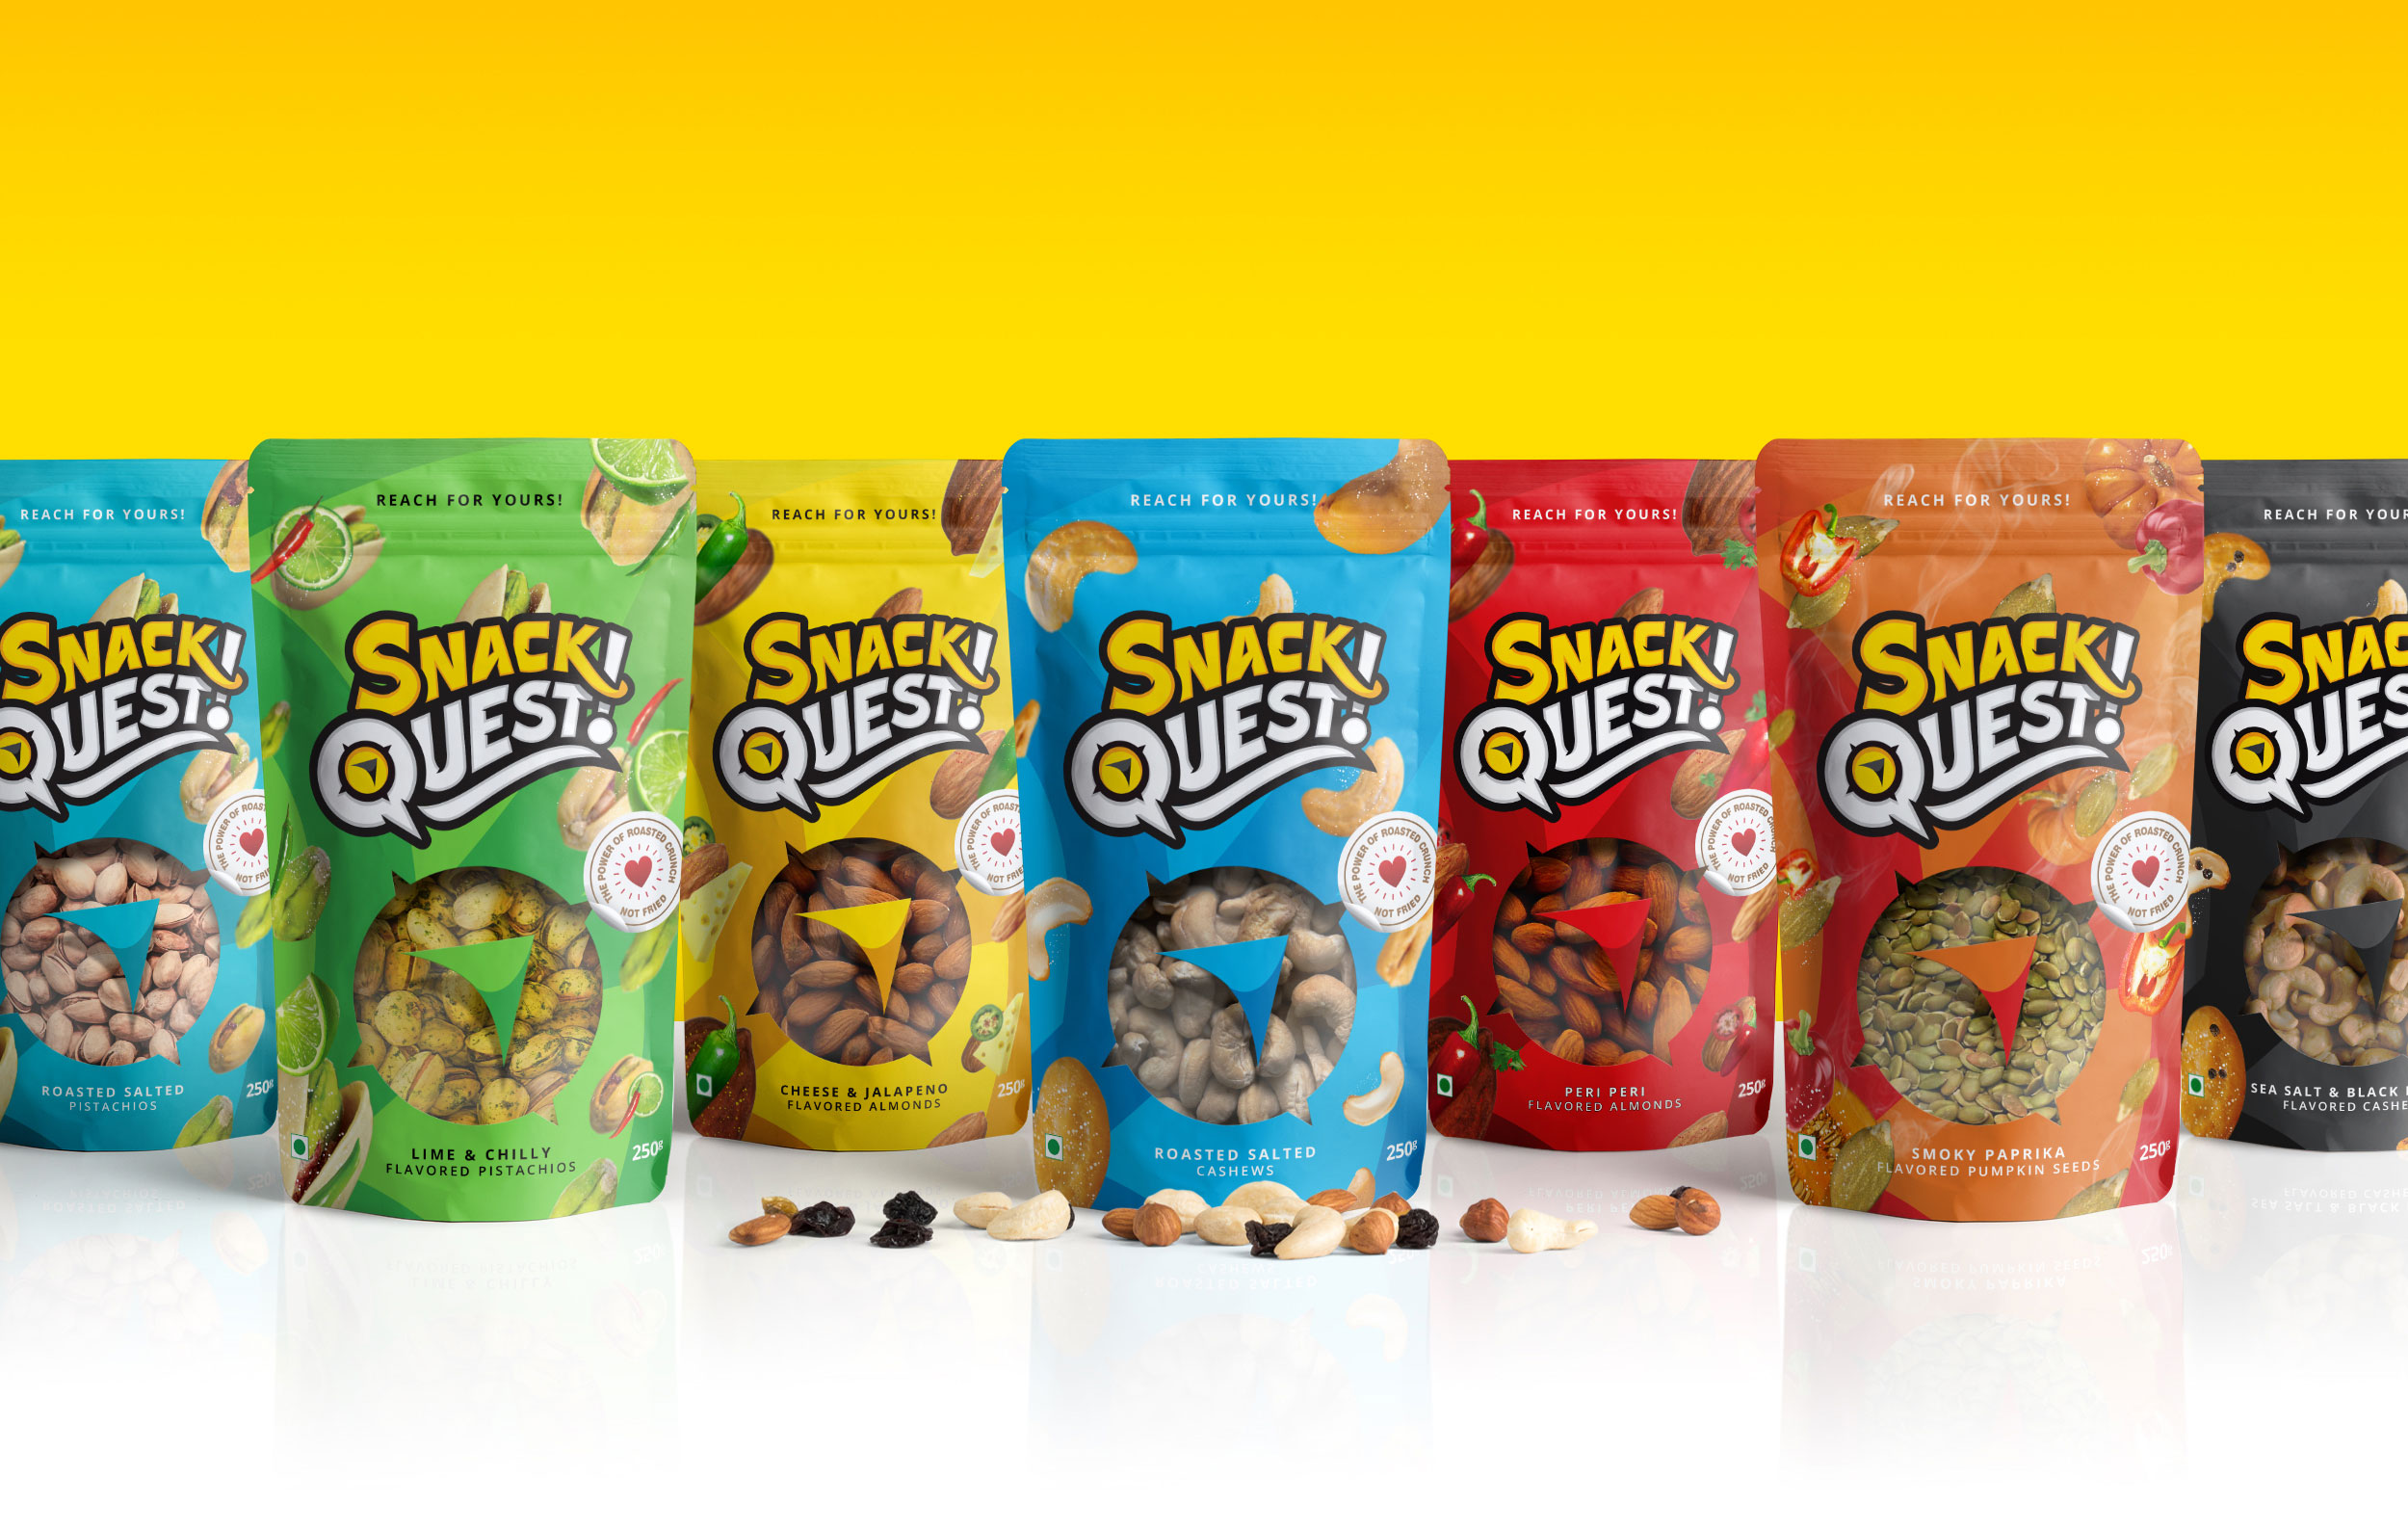 Snack-Quest-brand-identity-packaging-design-by-Artisticodopeo-Designz-02.jpg Image